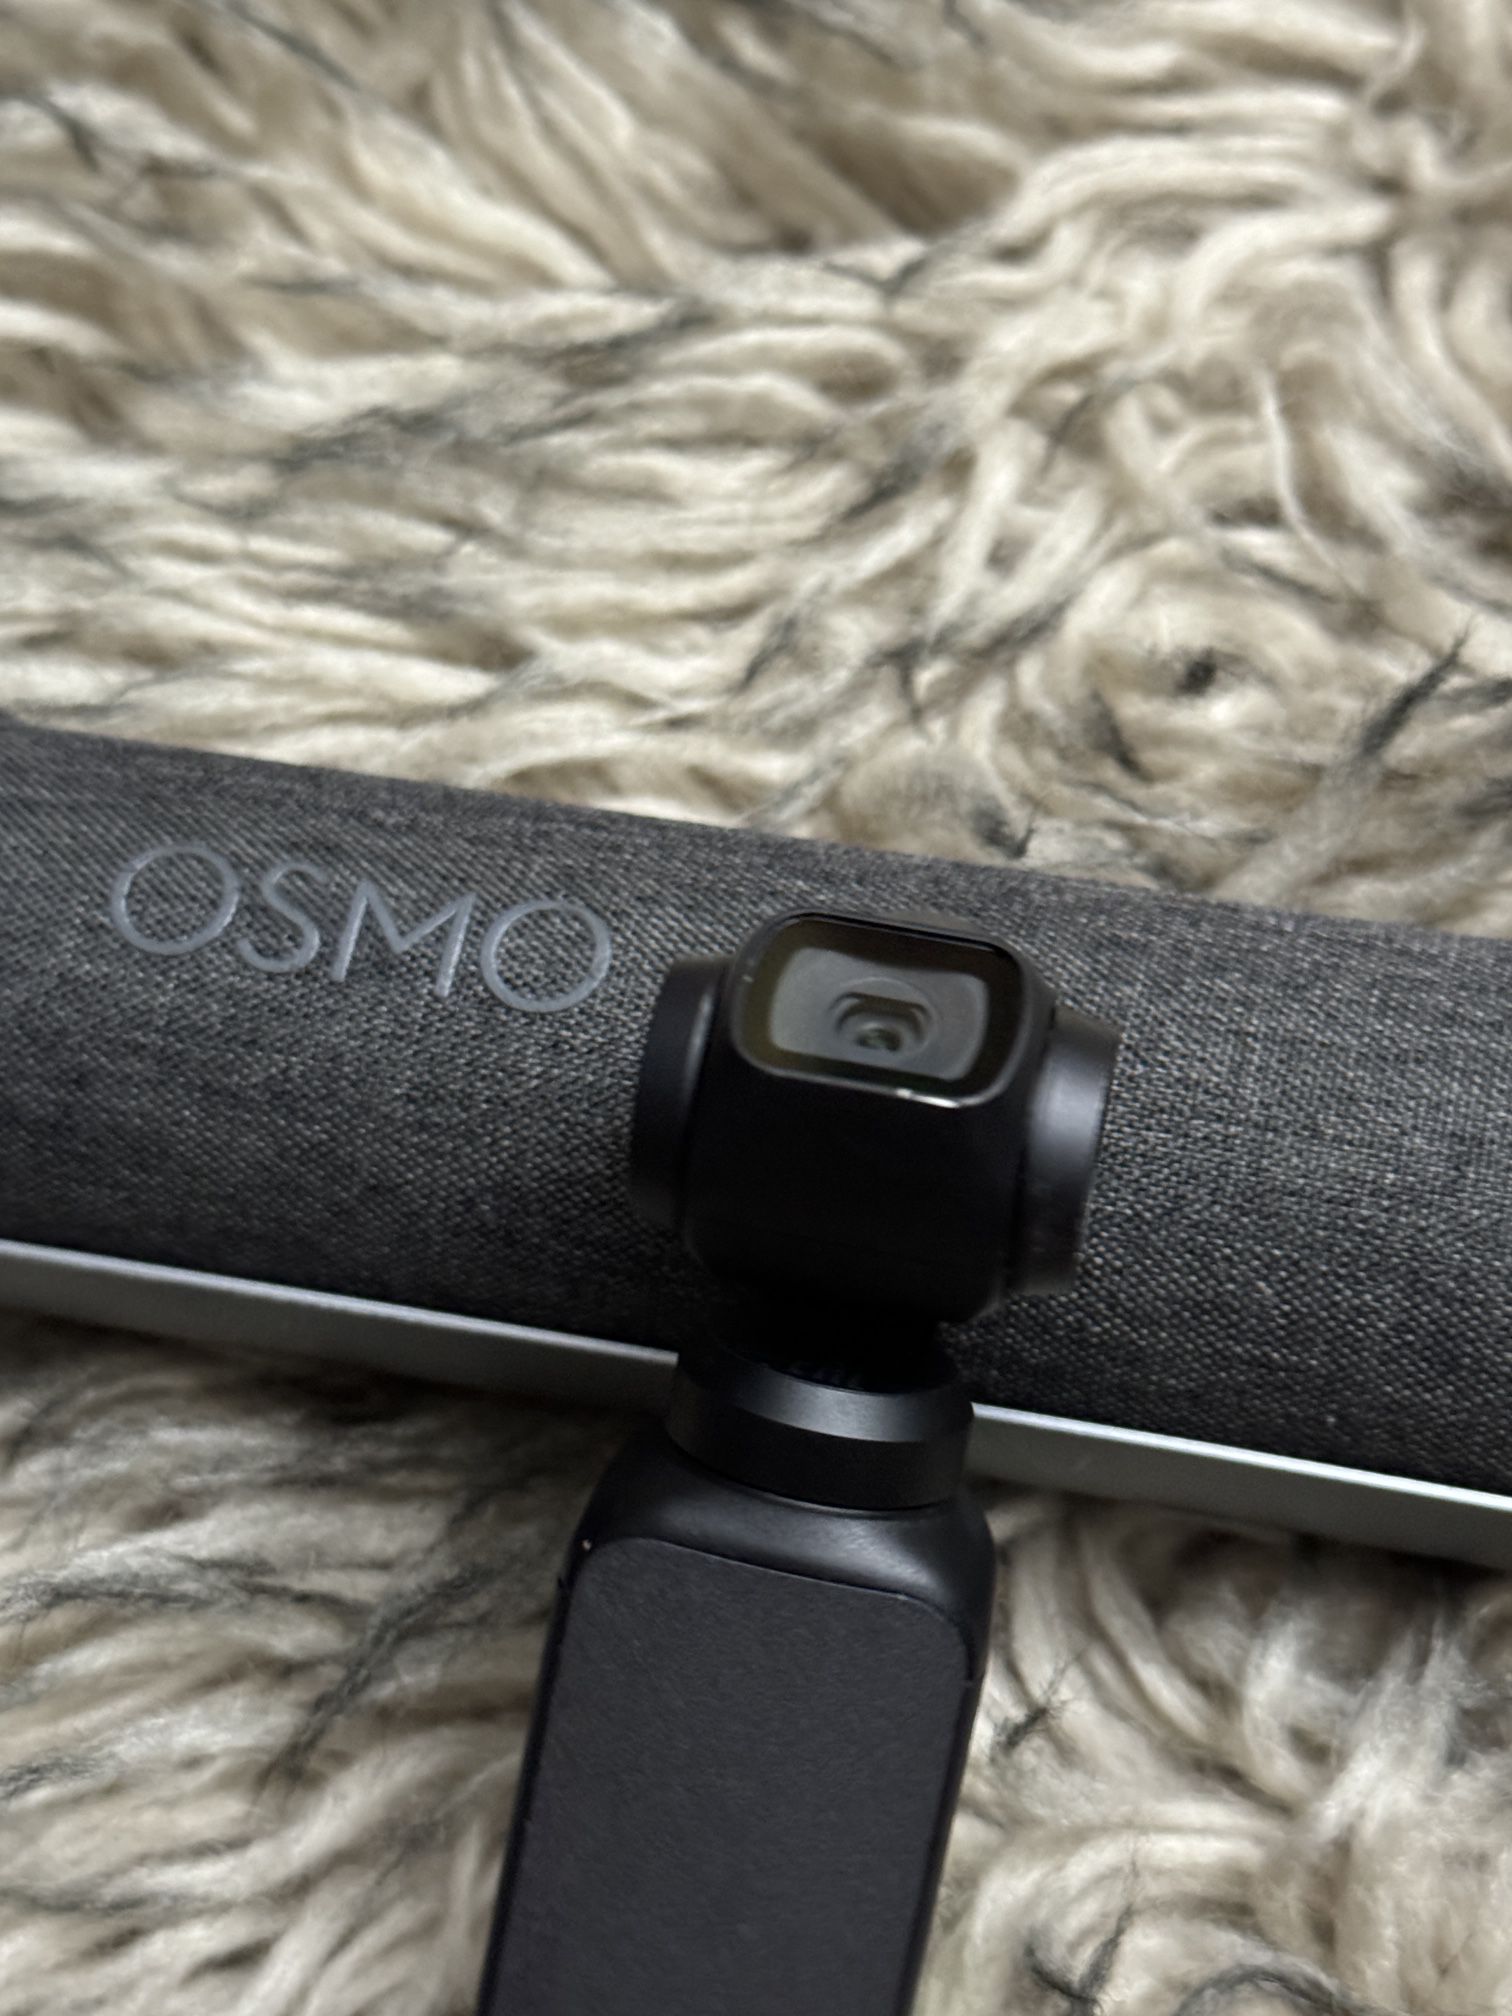 DJI OSMO Pocket 1 Gimbals Camera + Charging Case